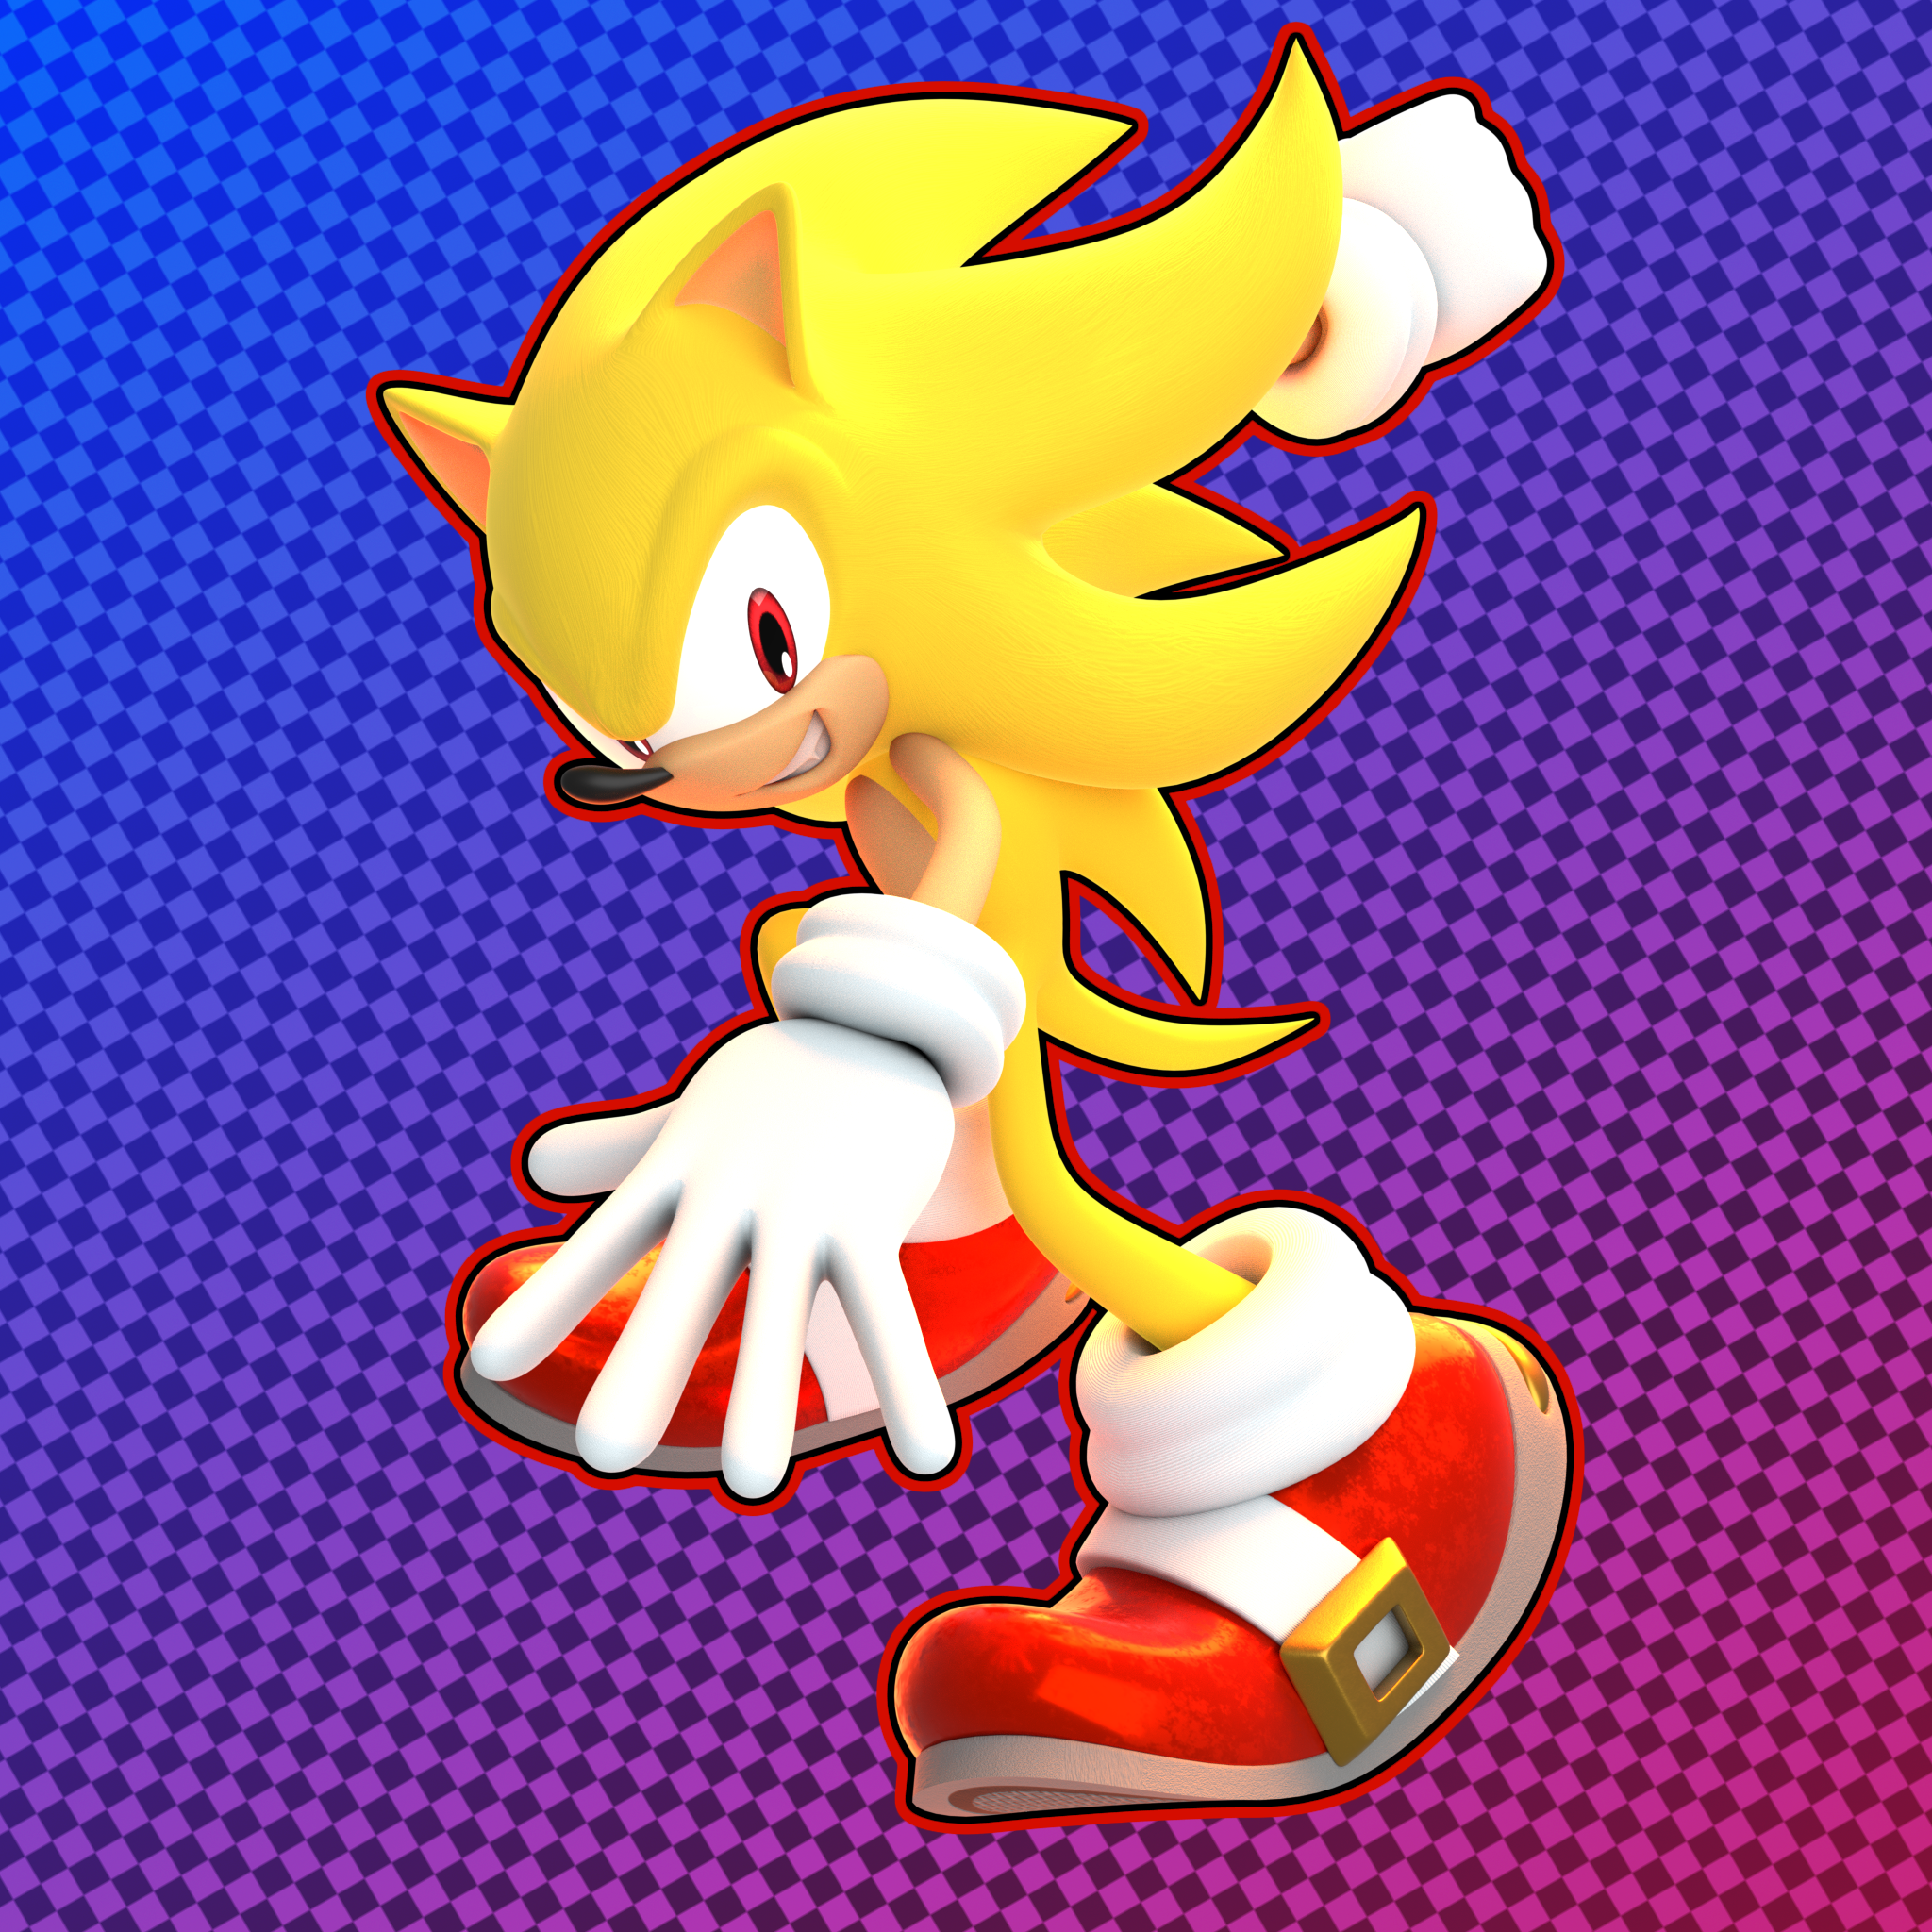 Sonic the Hedgehog render, Super Sonic 1 by Justin113D on DeviantArt